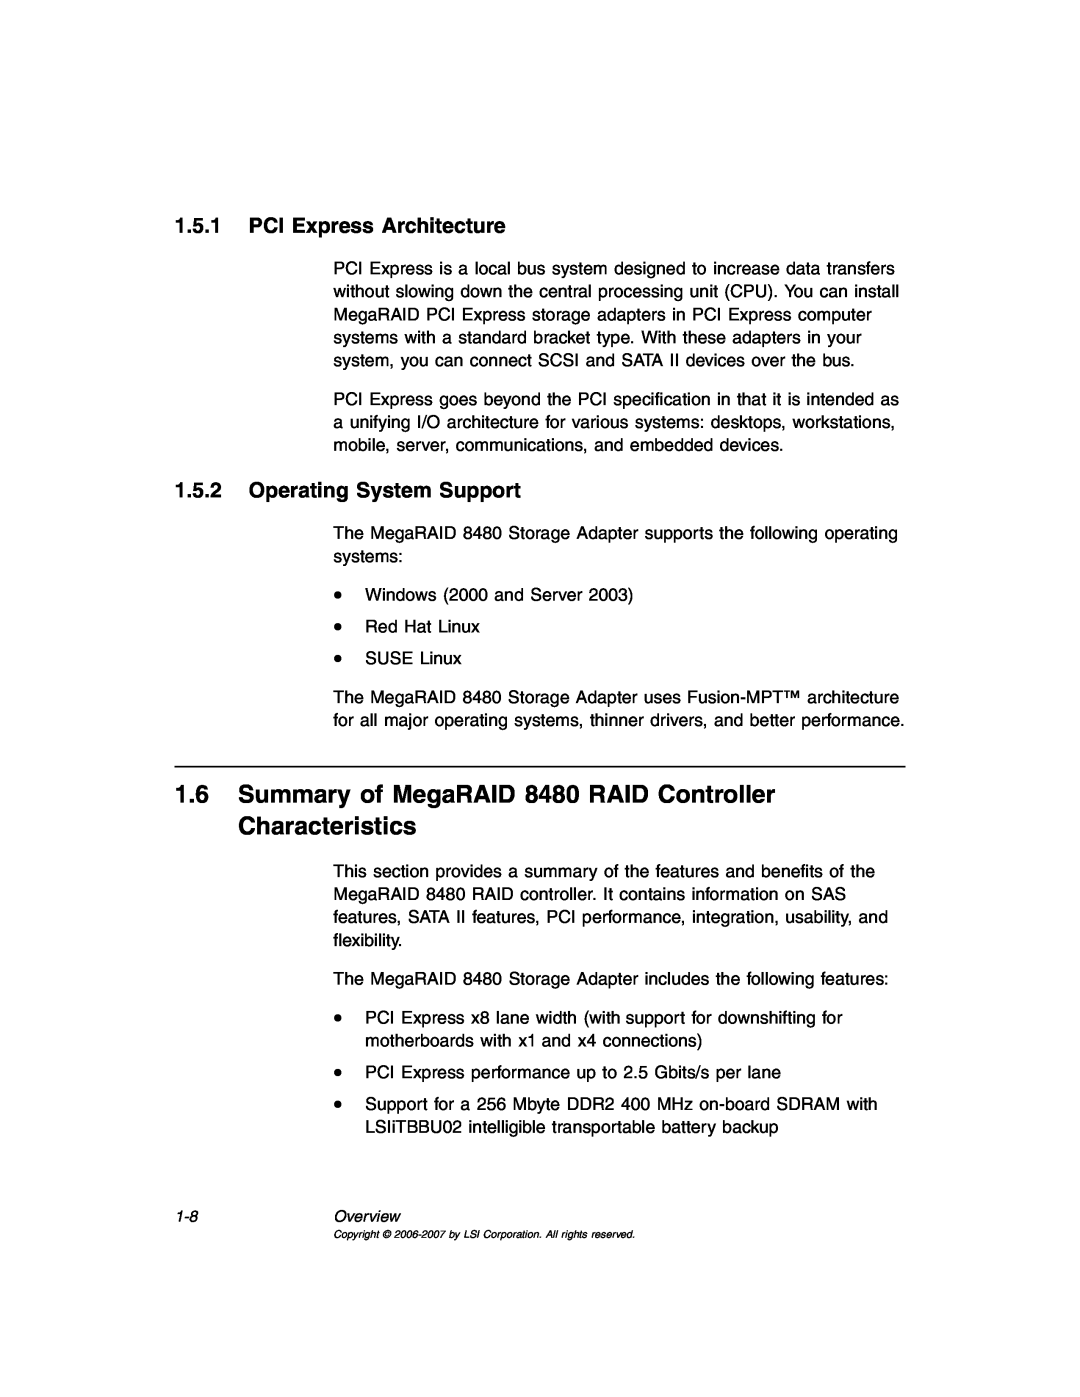 IBM manual Summary of MegaRAID 8480 RAID Controller Characteristics, PCI Express Architecture, Operating System Support 